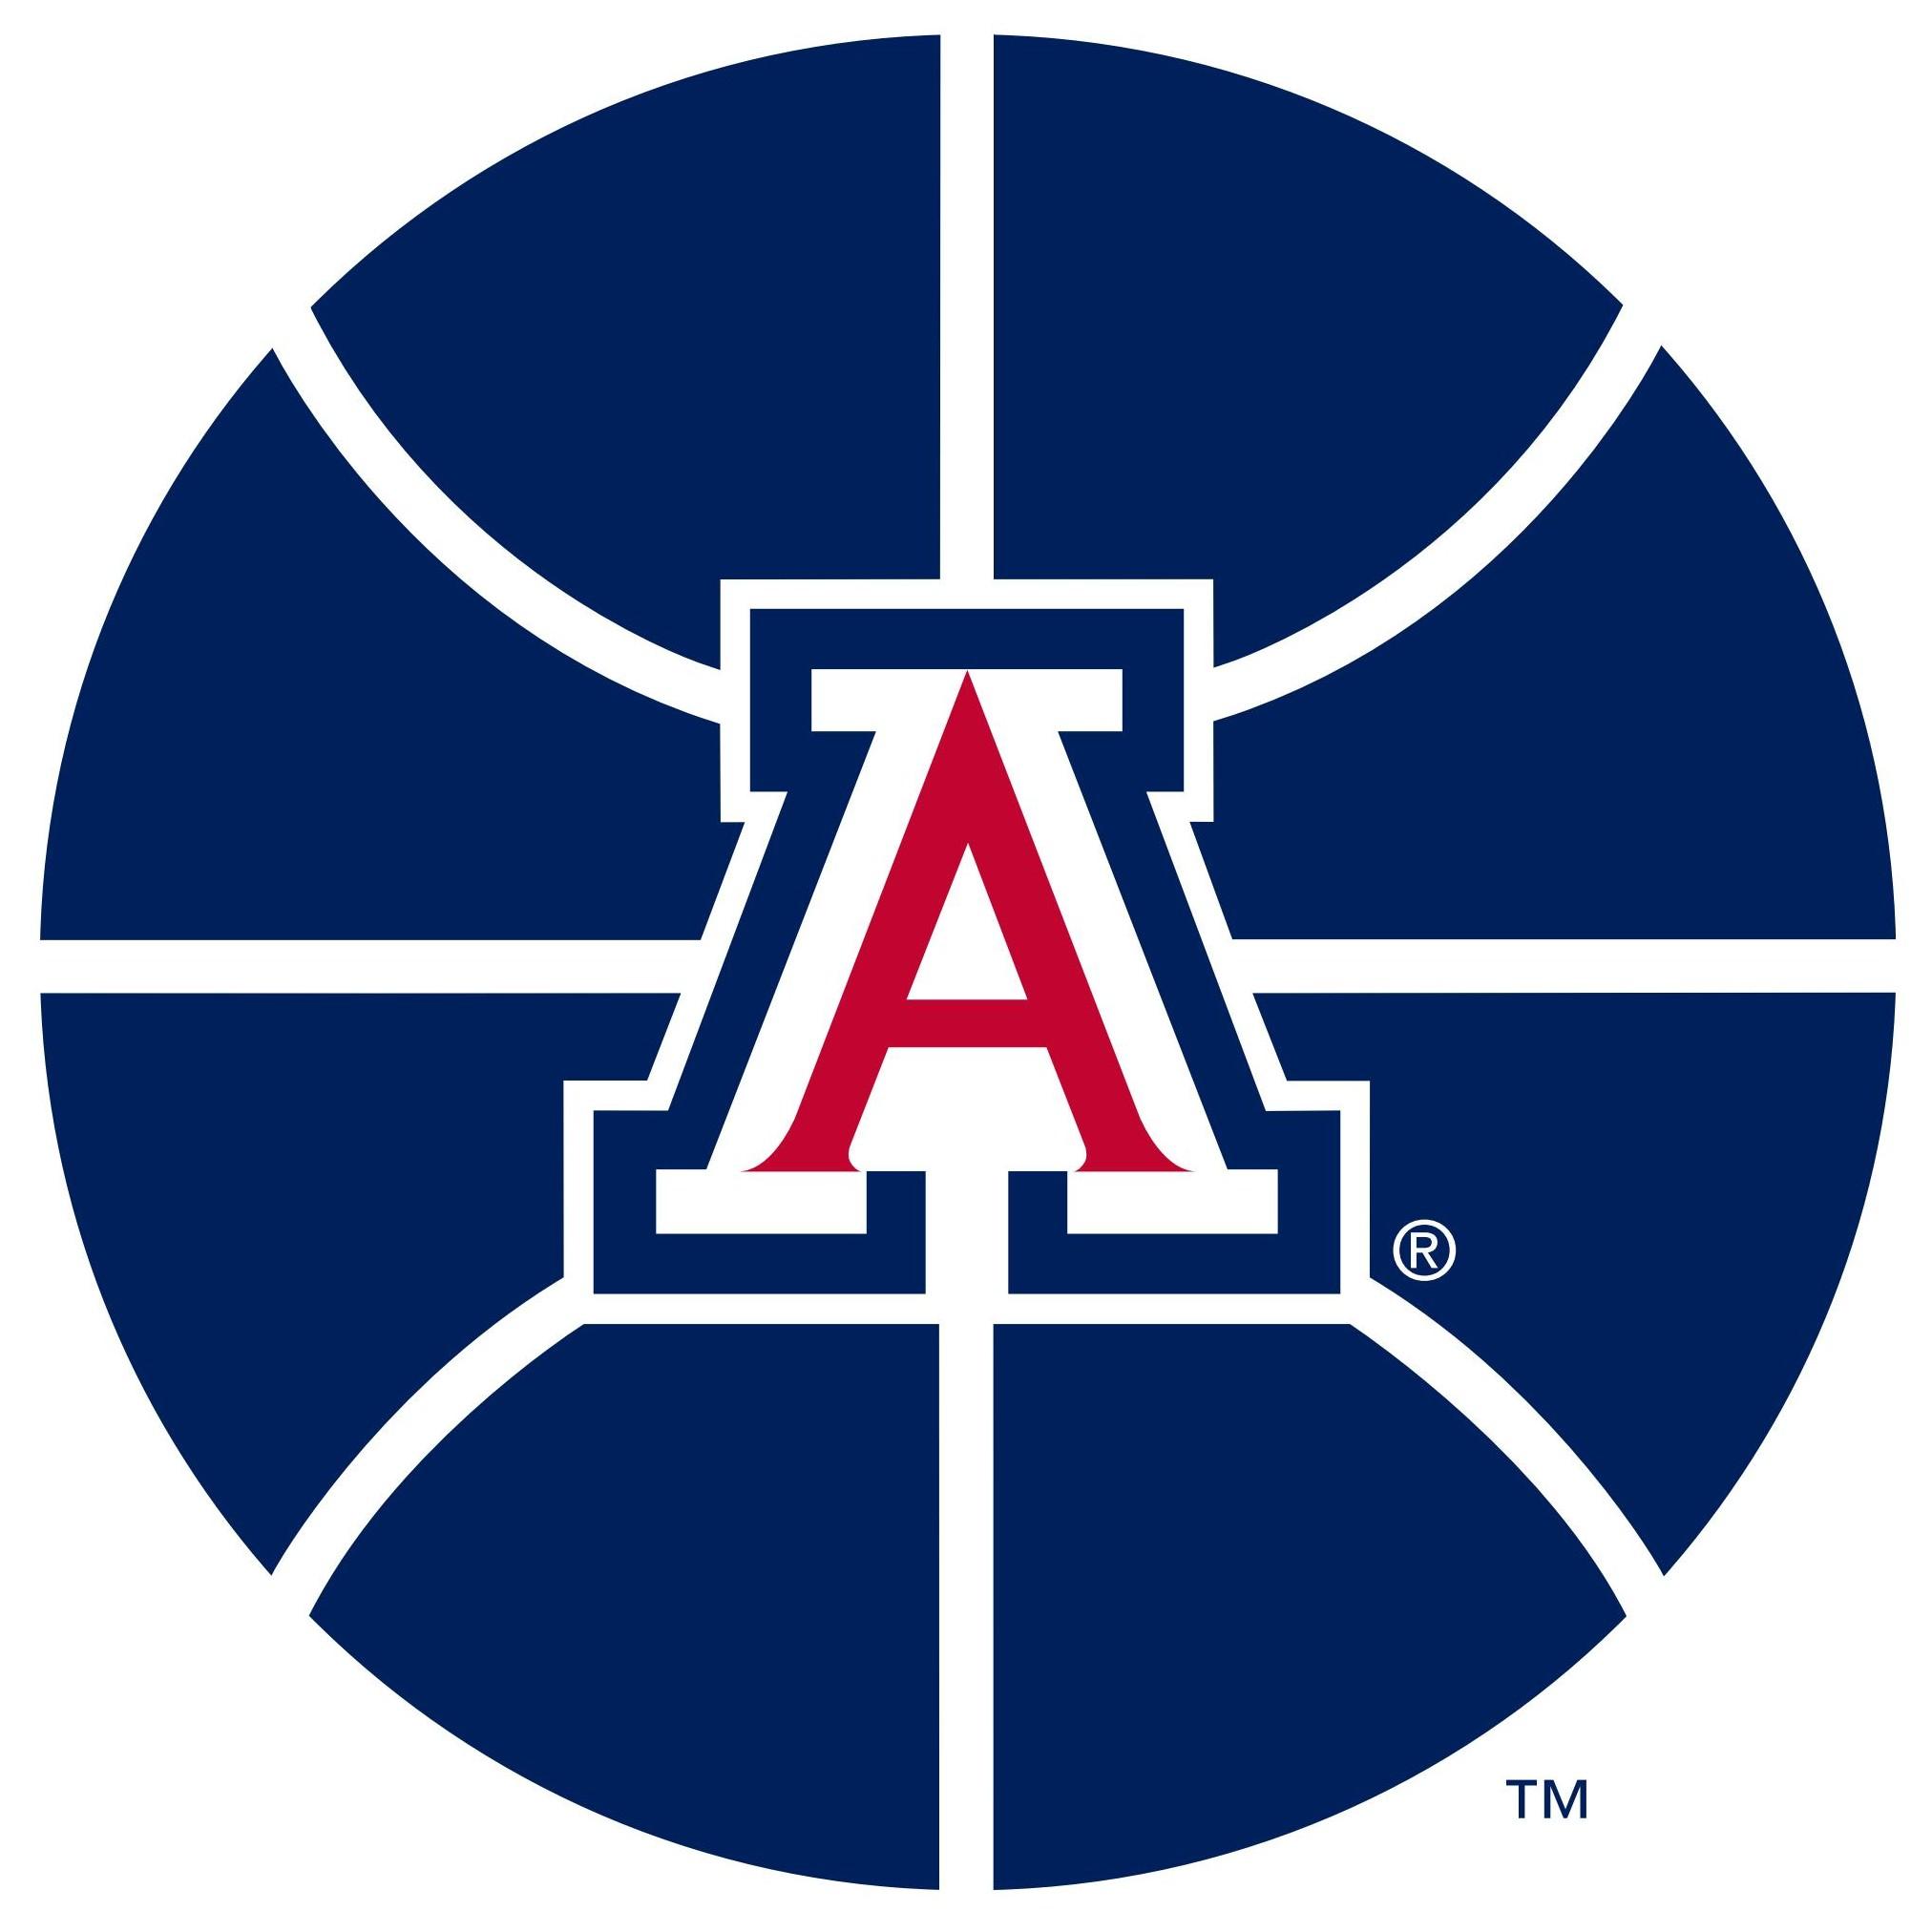 U of Arizona Logo - University of Arizona Seal and Logos Vector Free Download